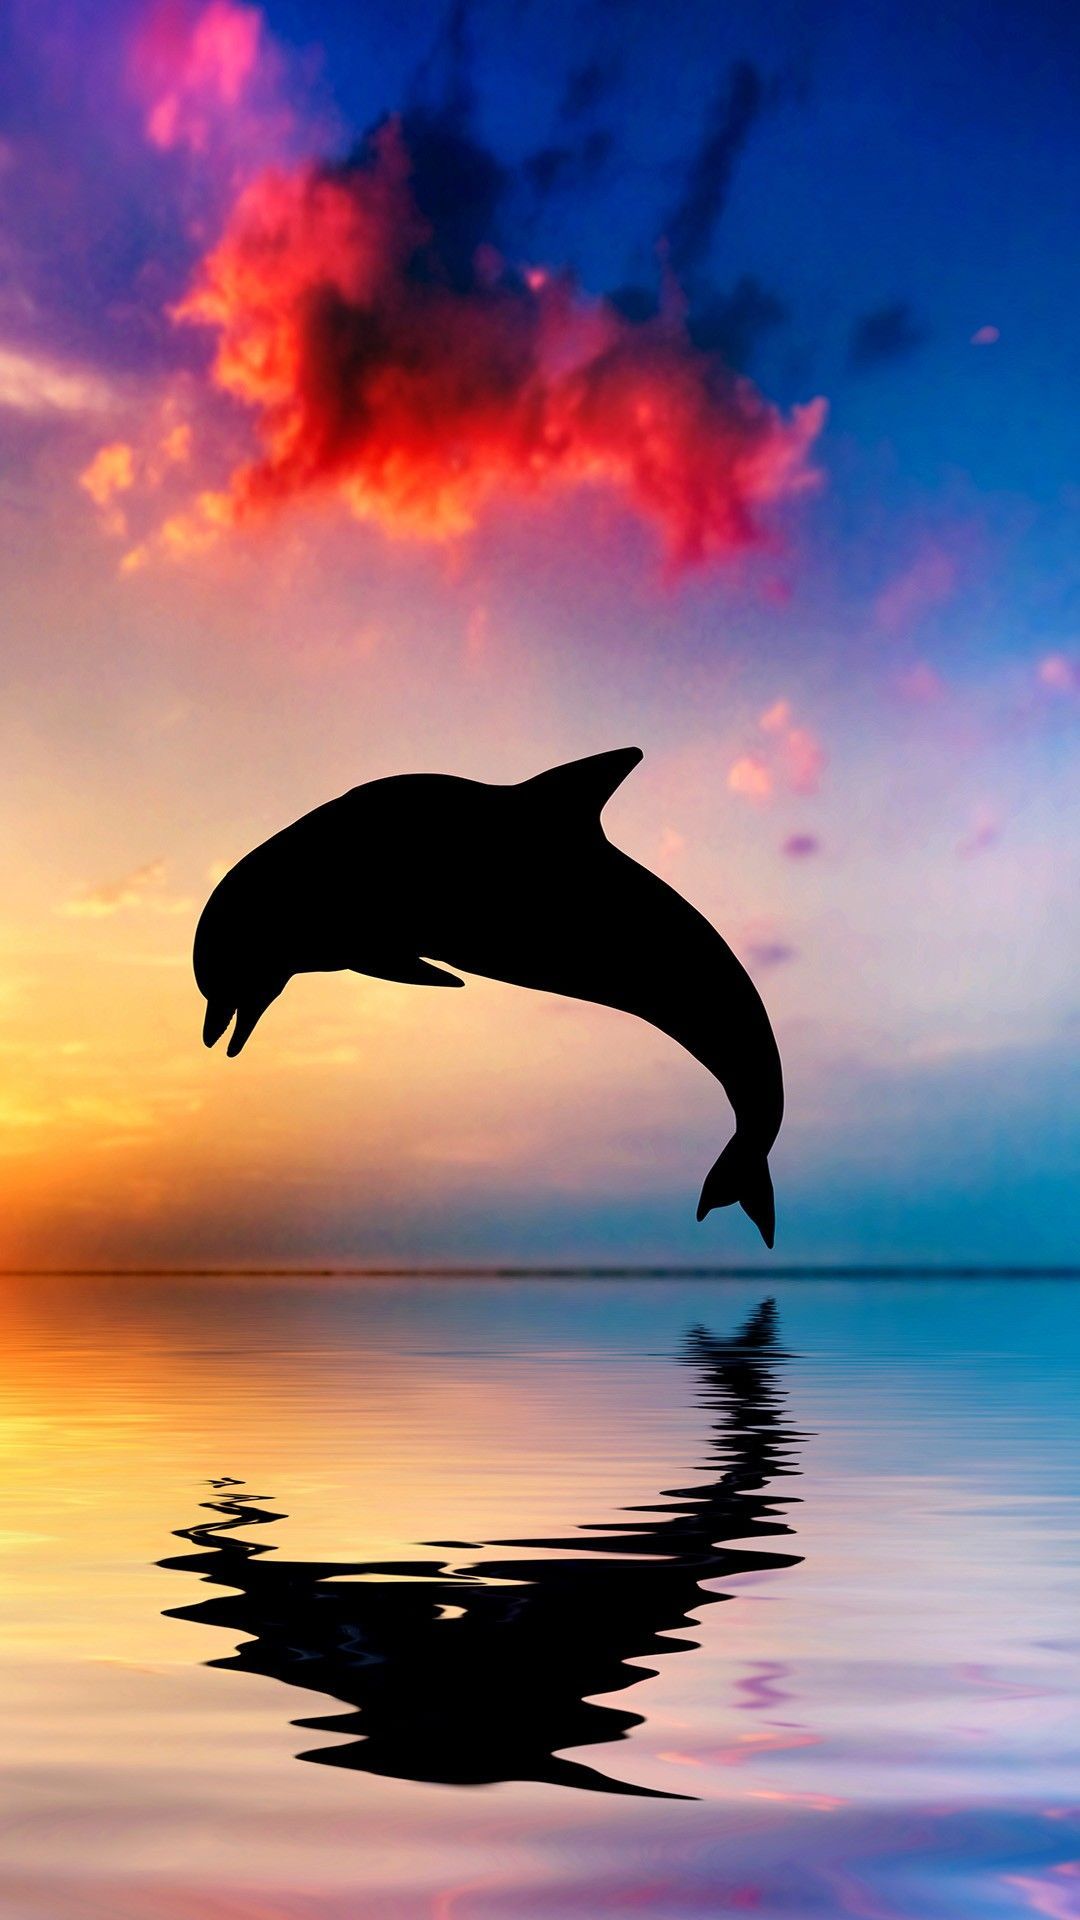 Dolphin bounce the sea. iPhone .com